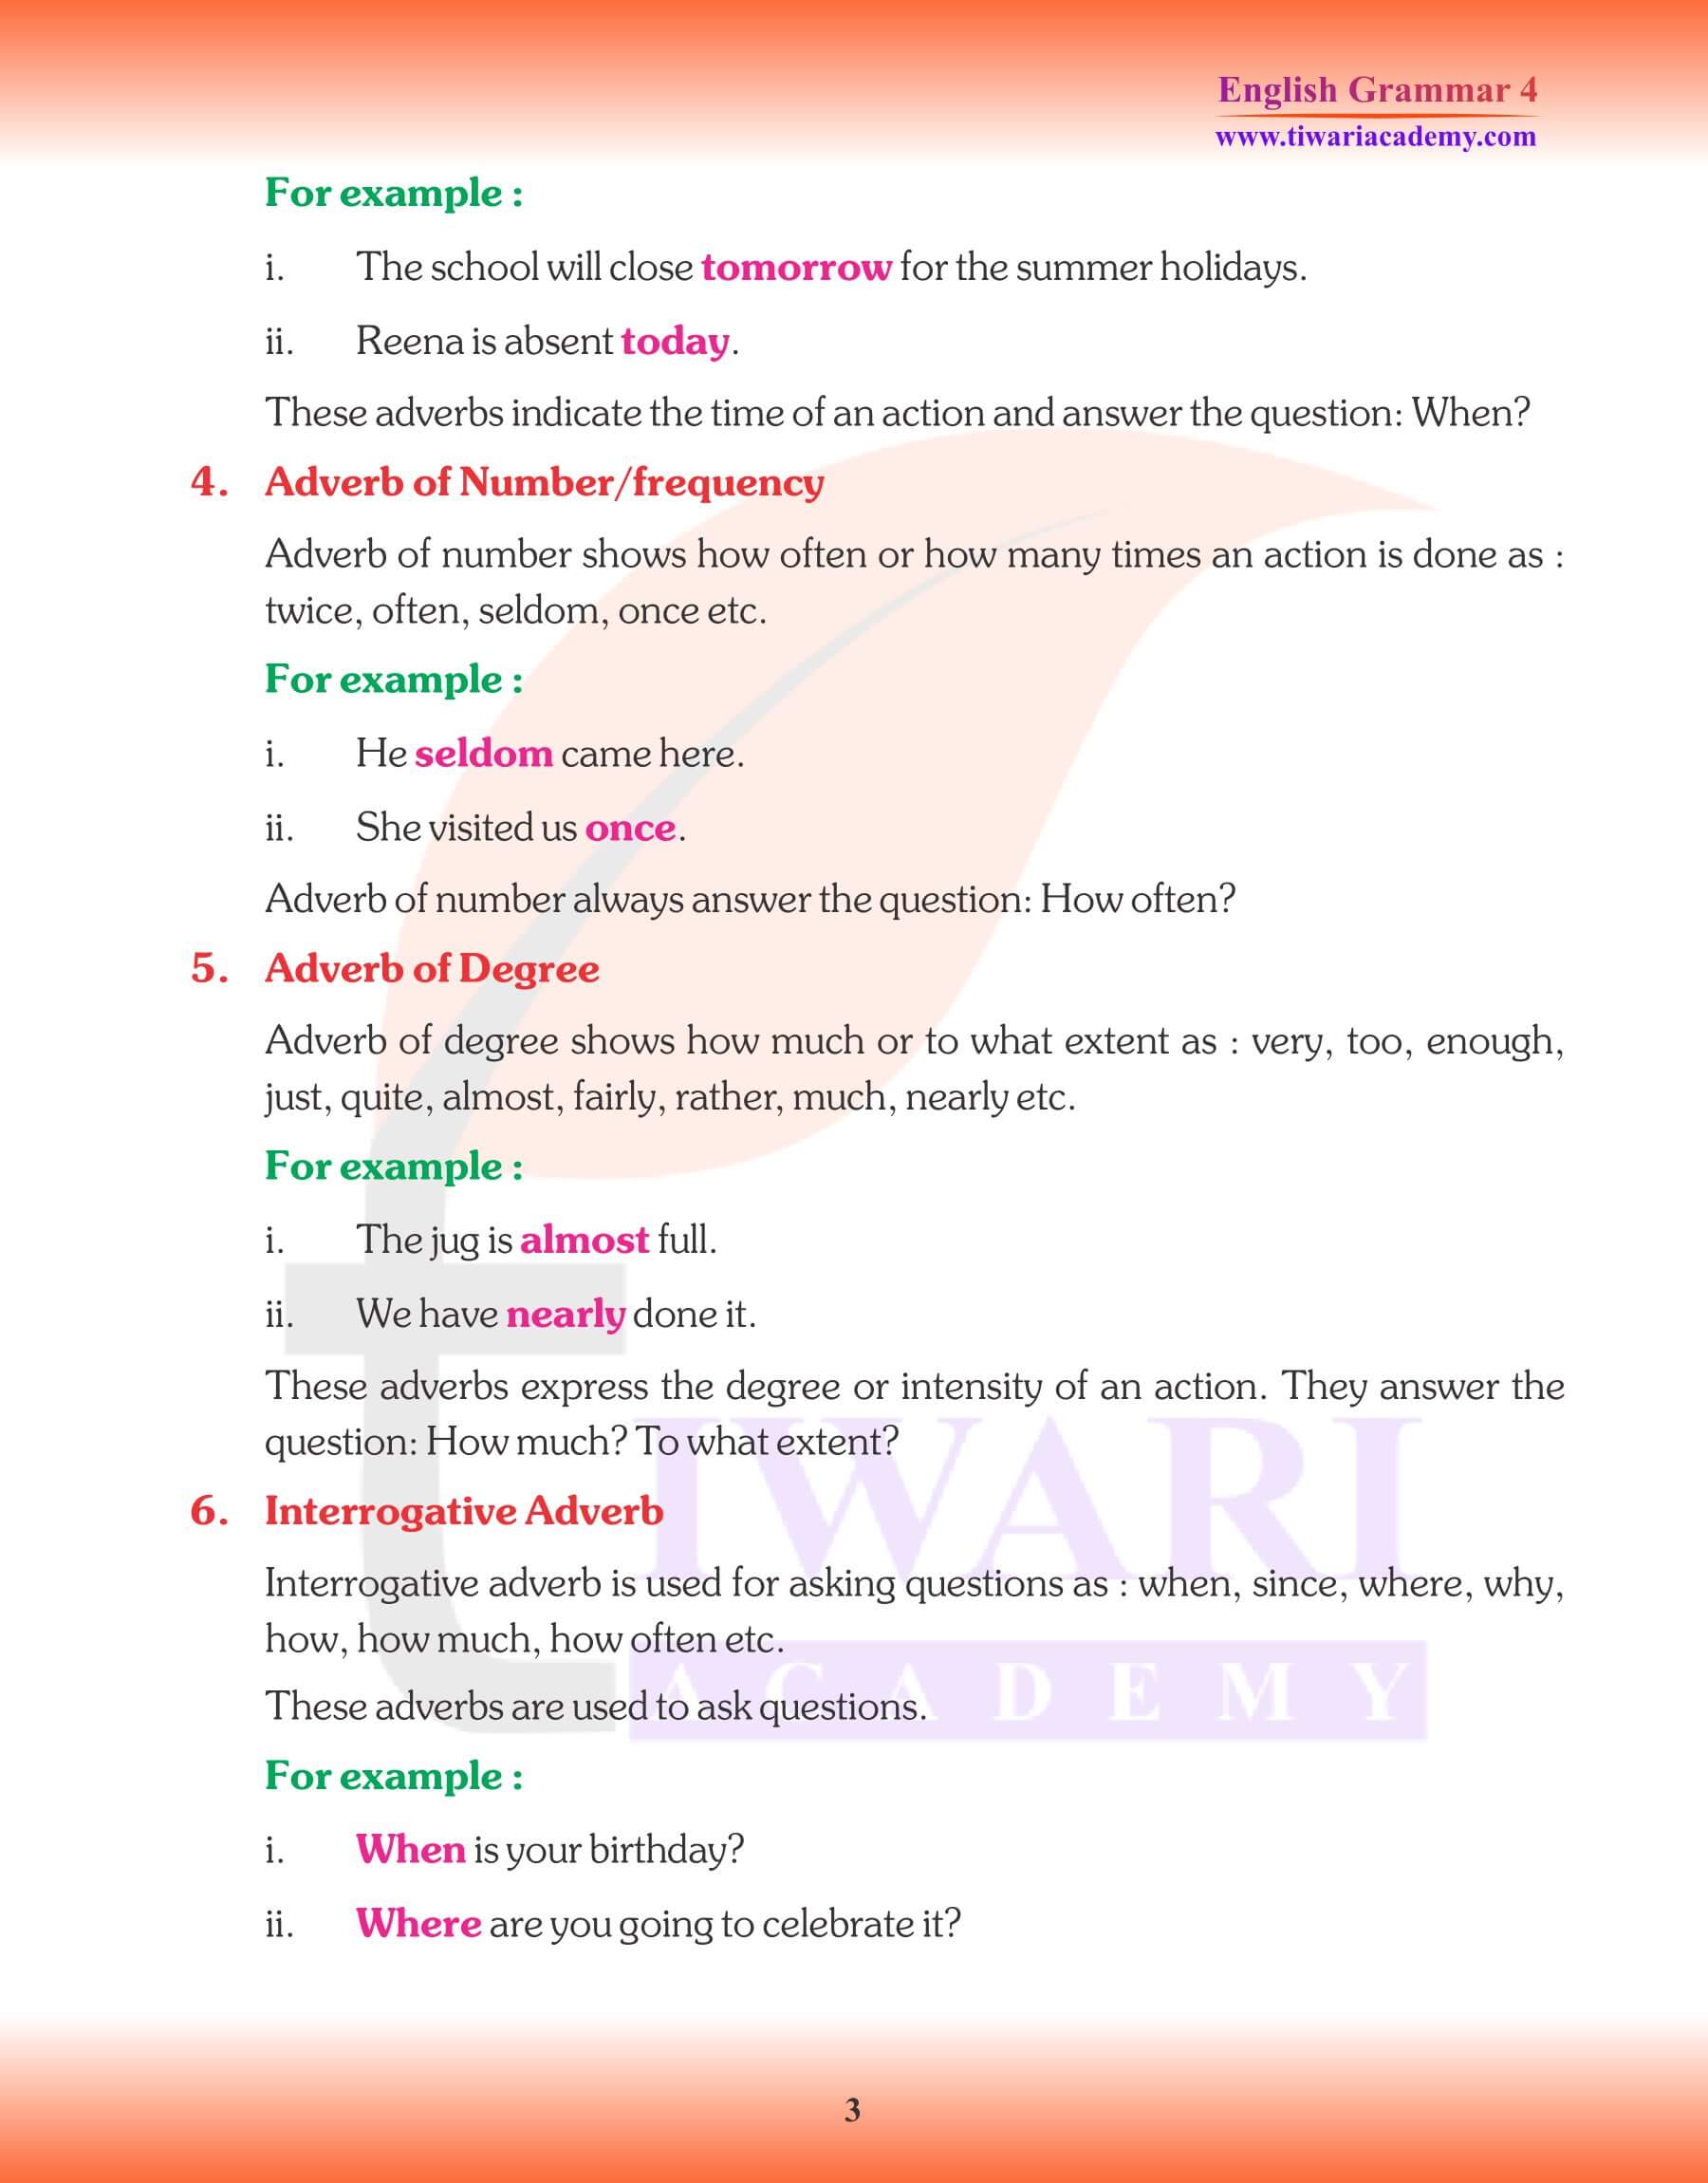 Class 4 English Grammar Adverb Revision Book